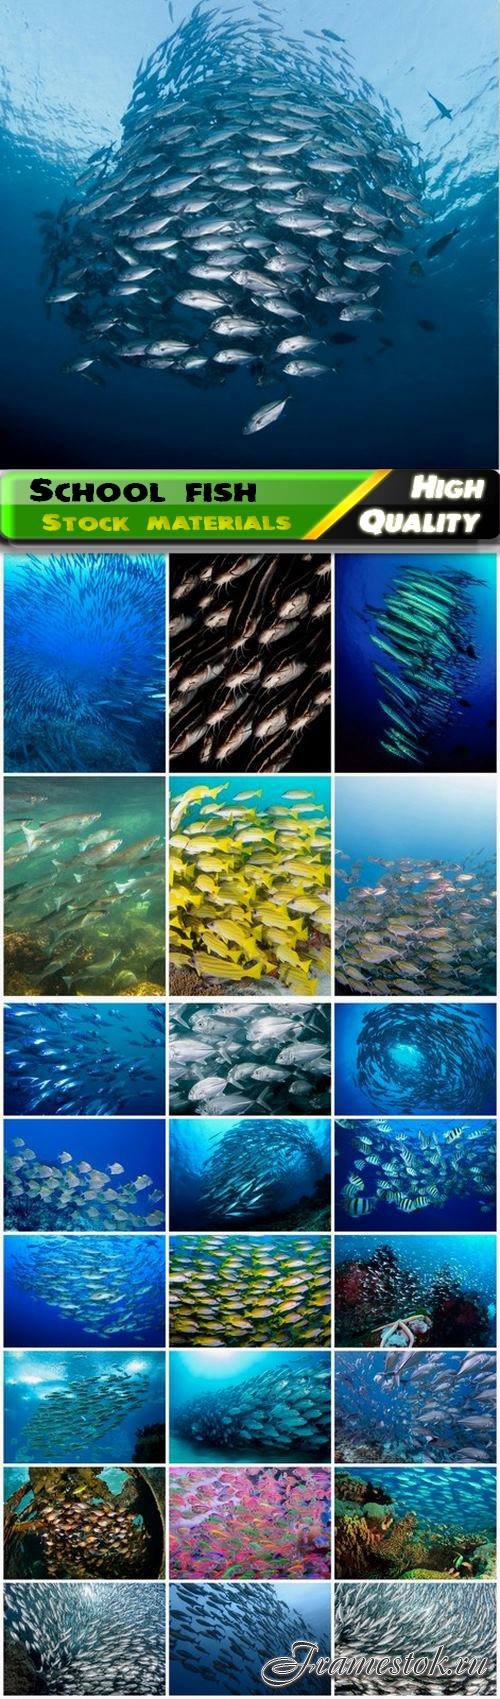 Underwater sea and ocean landscape tropical school fish - 25 HQ Jpg